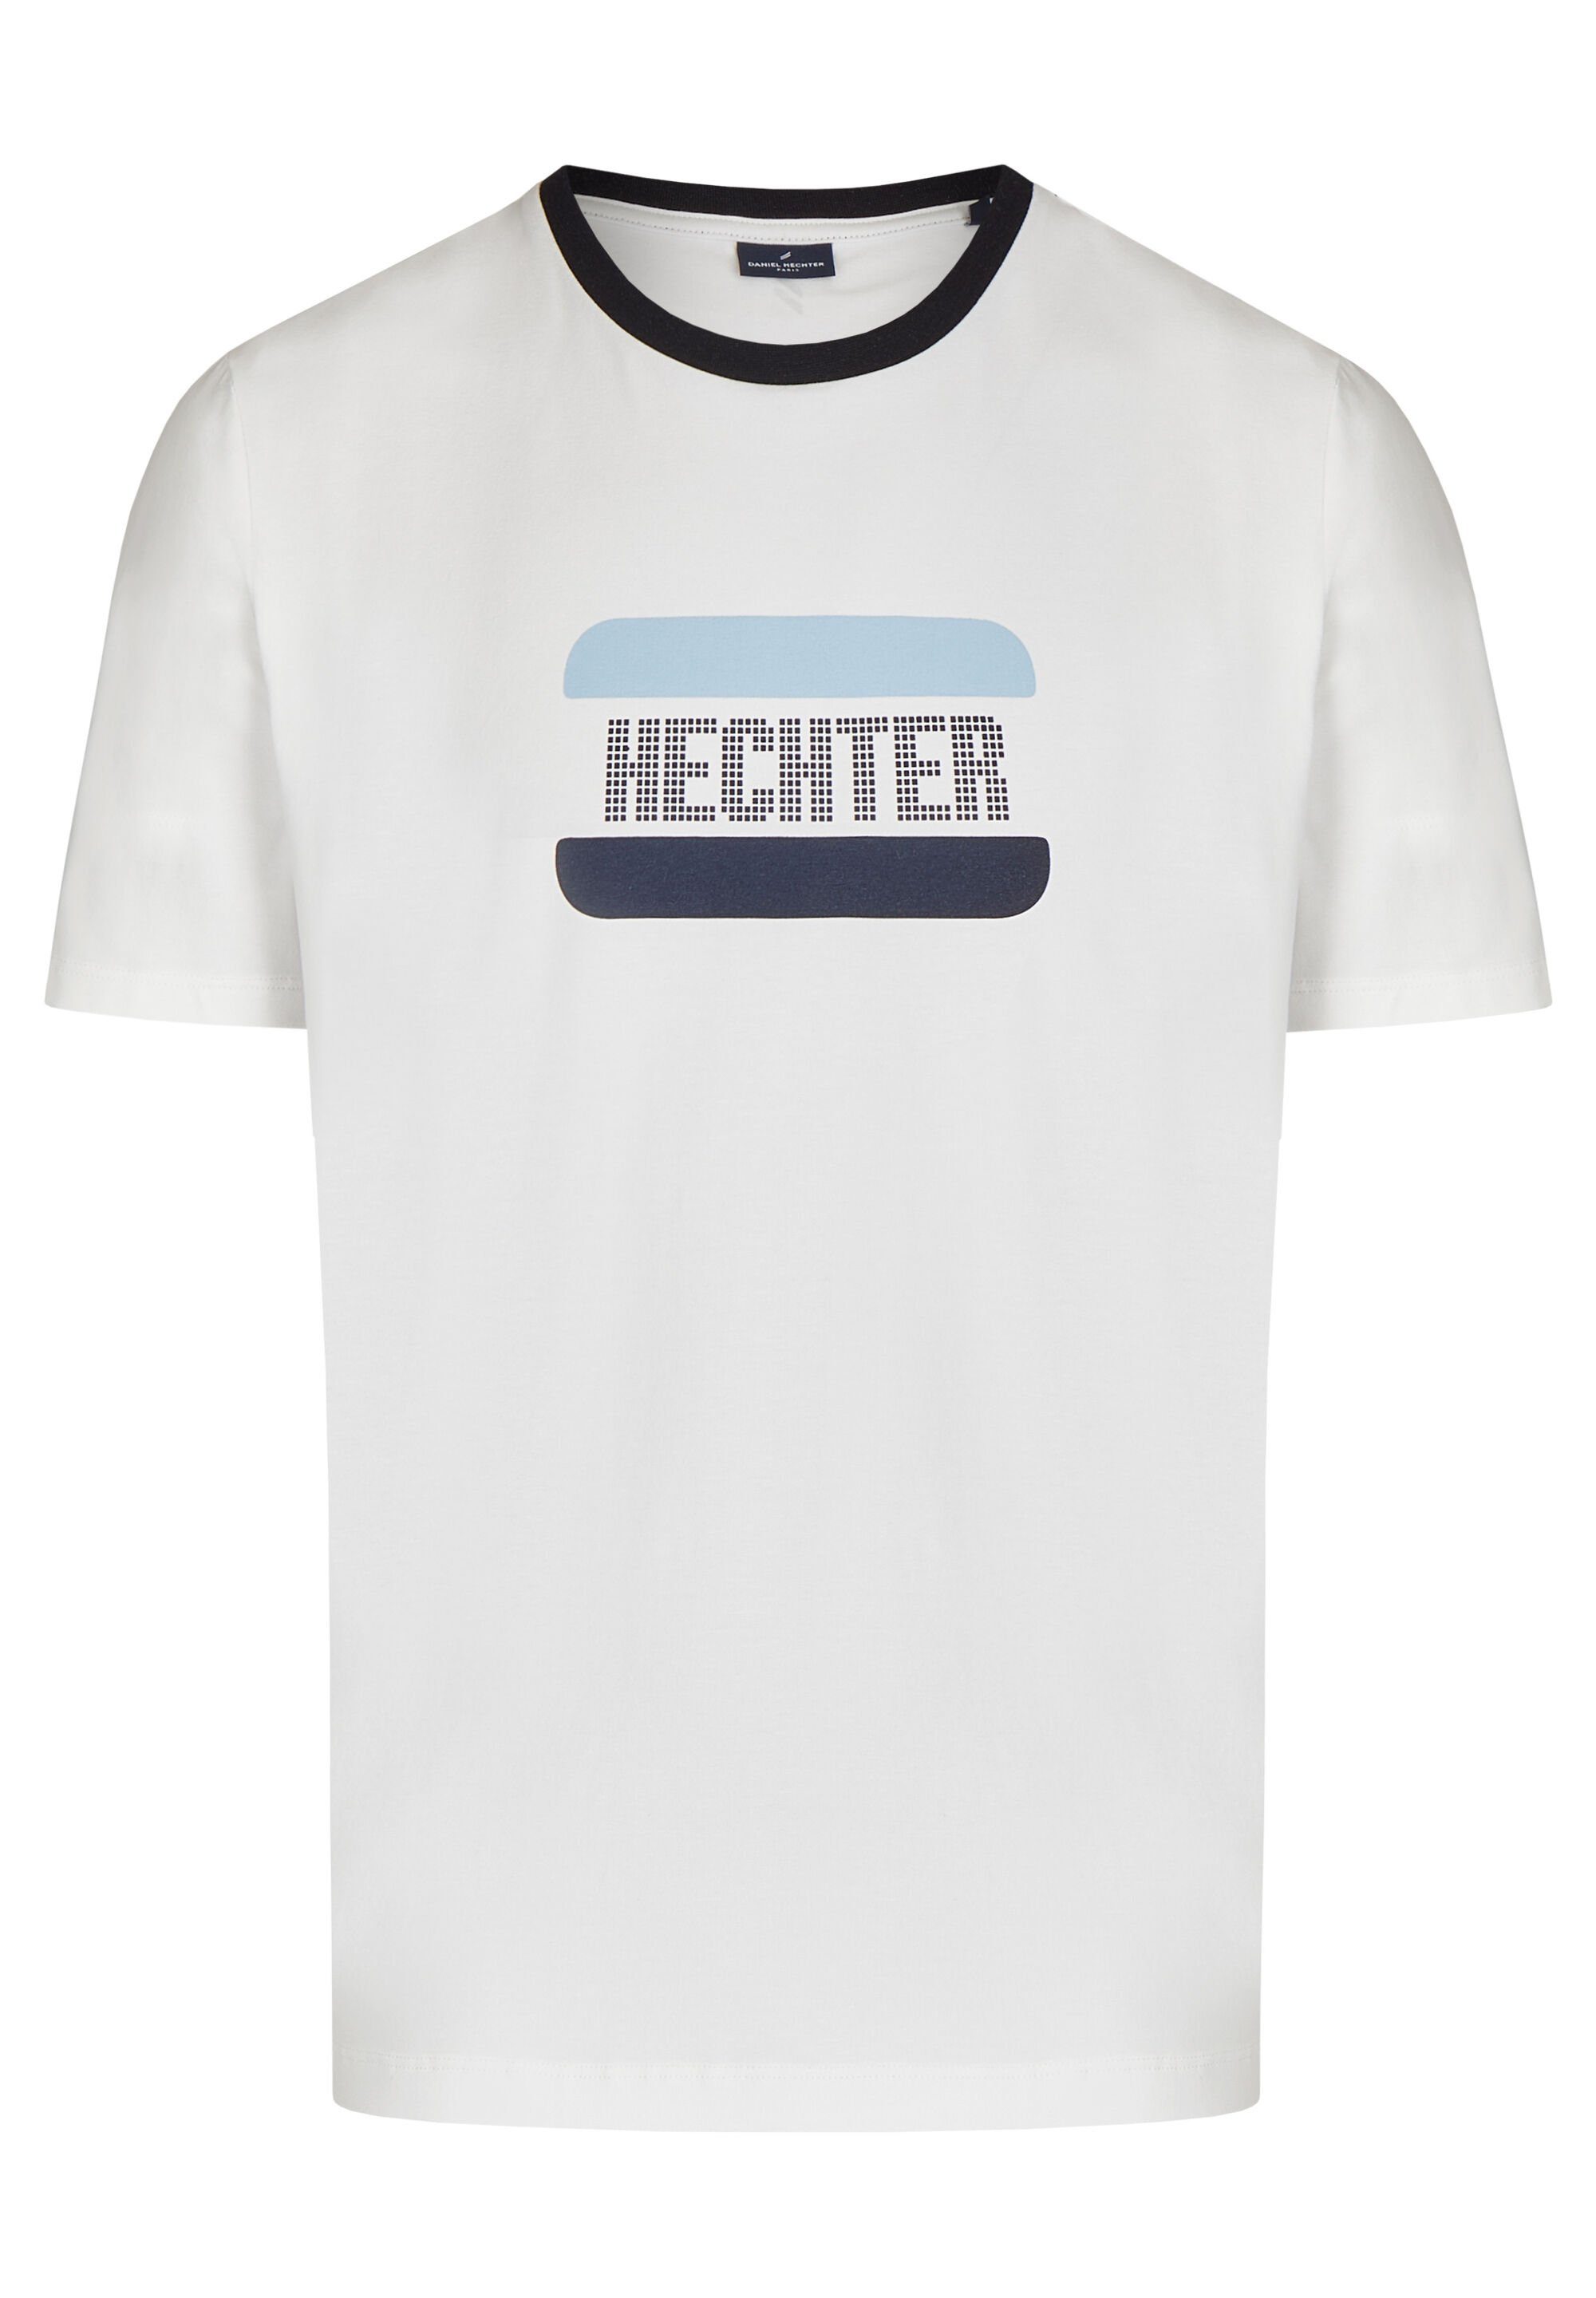 T-Shirt PARIS Print HECHTER mit Iconic